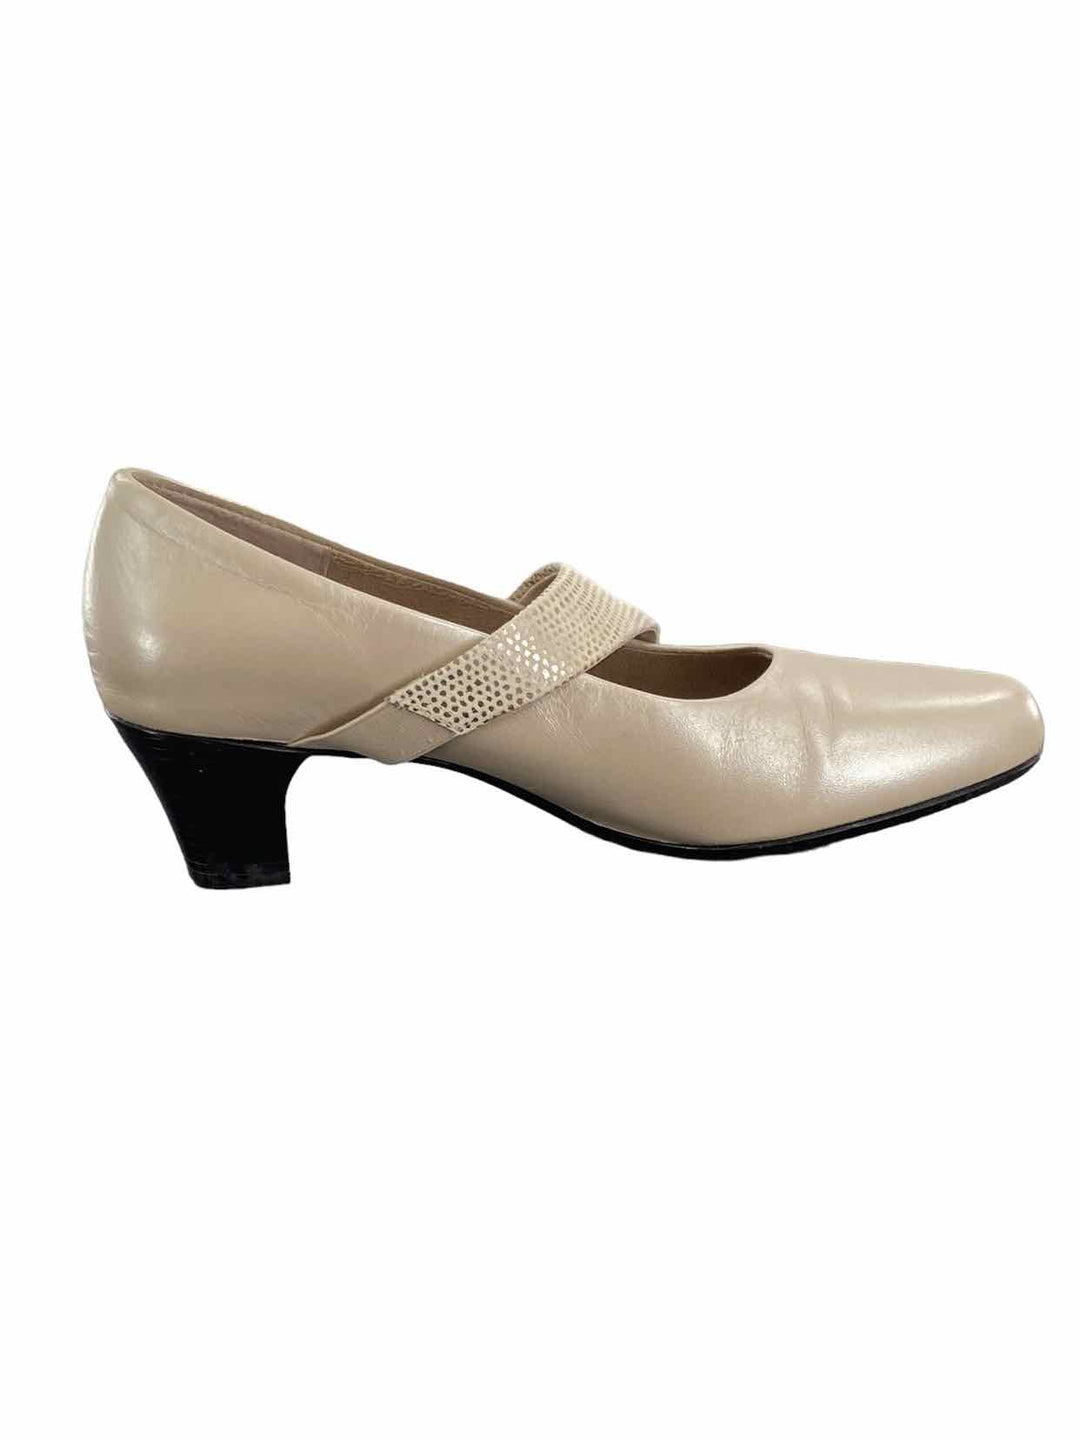 Munro Shoe Size 8 Cream Leather Heels